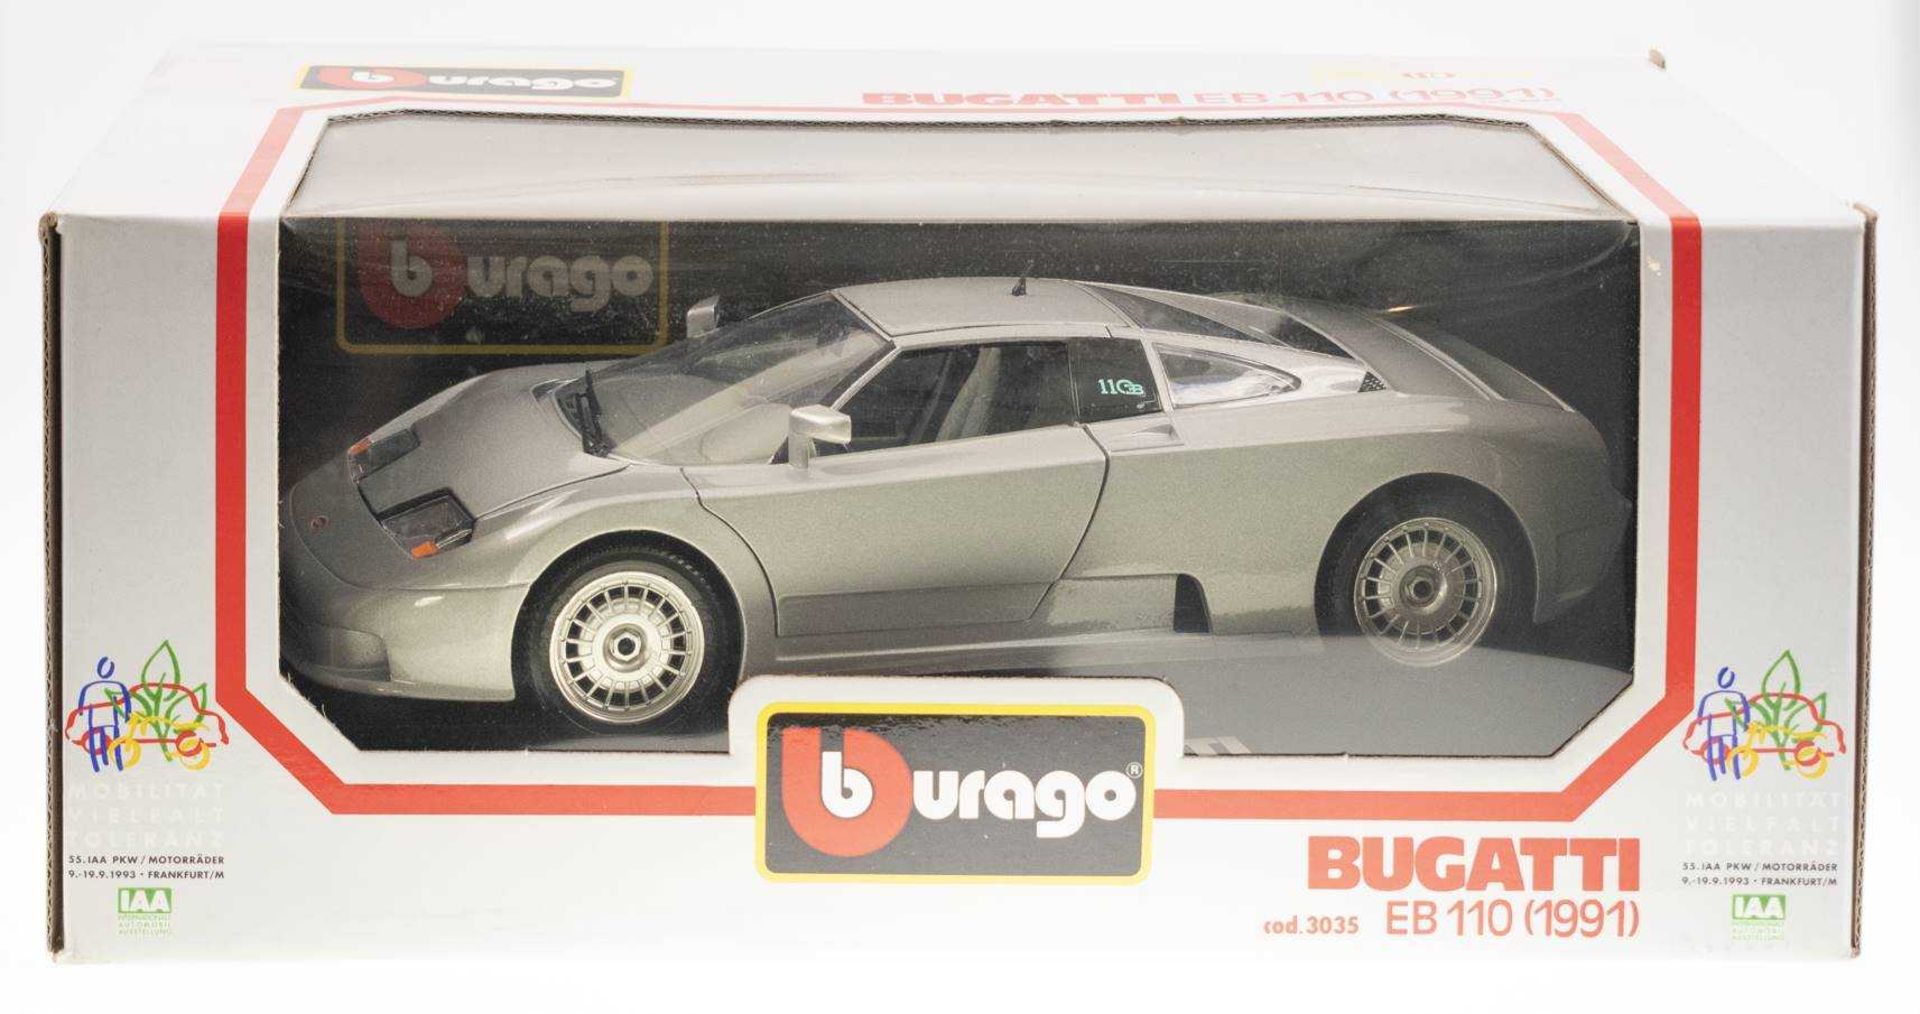 18 models various Autotypen, including BUGATTI EB 110, LAMBORGHINI Diablo / Countach, ALFA romeo, Ou - Image 4 of 22